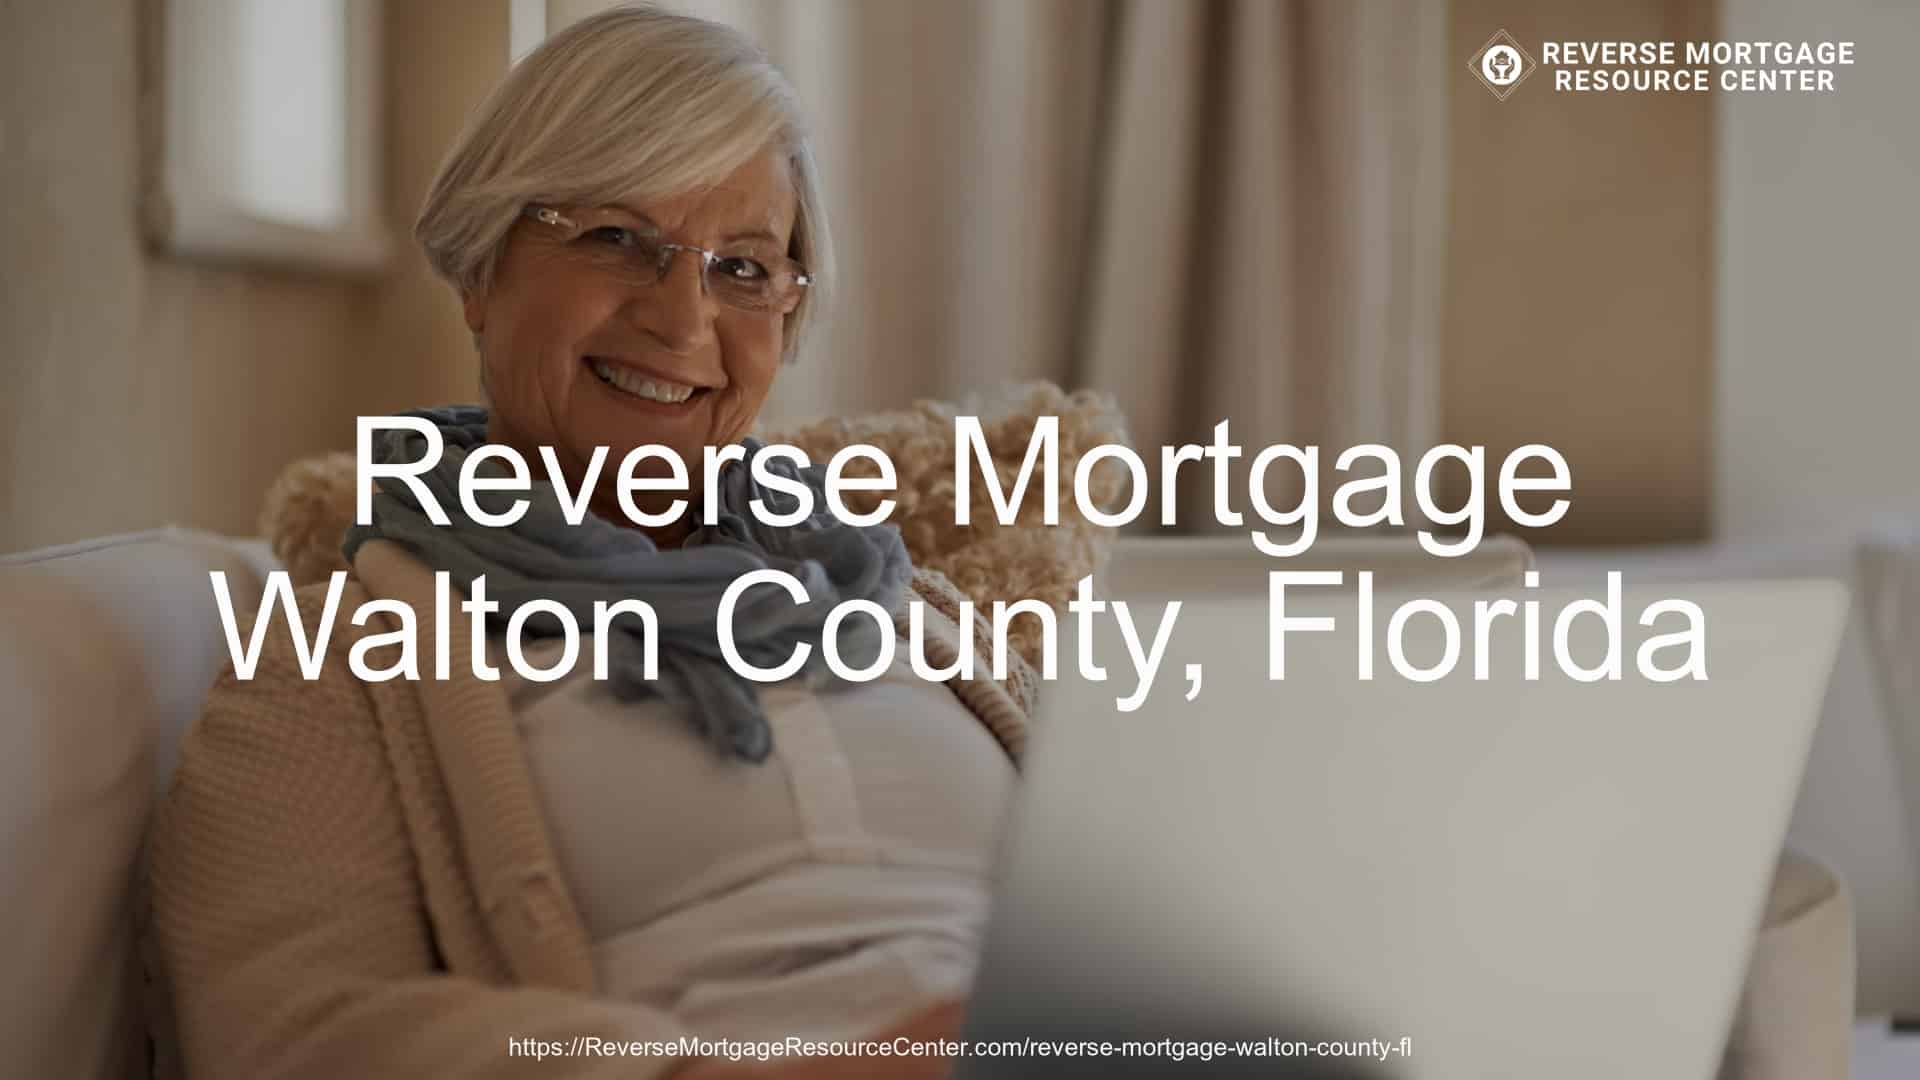 Reverse Mortgage Loans in Walton County Florida